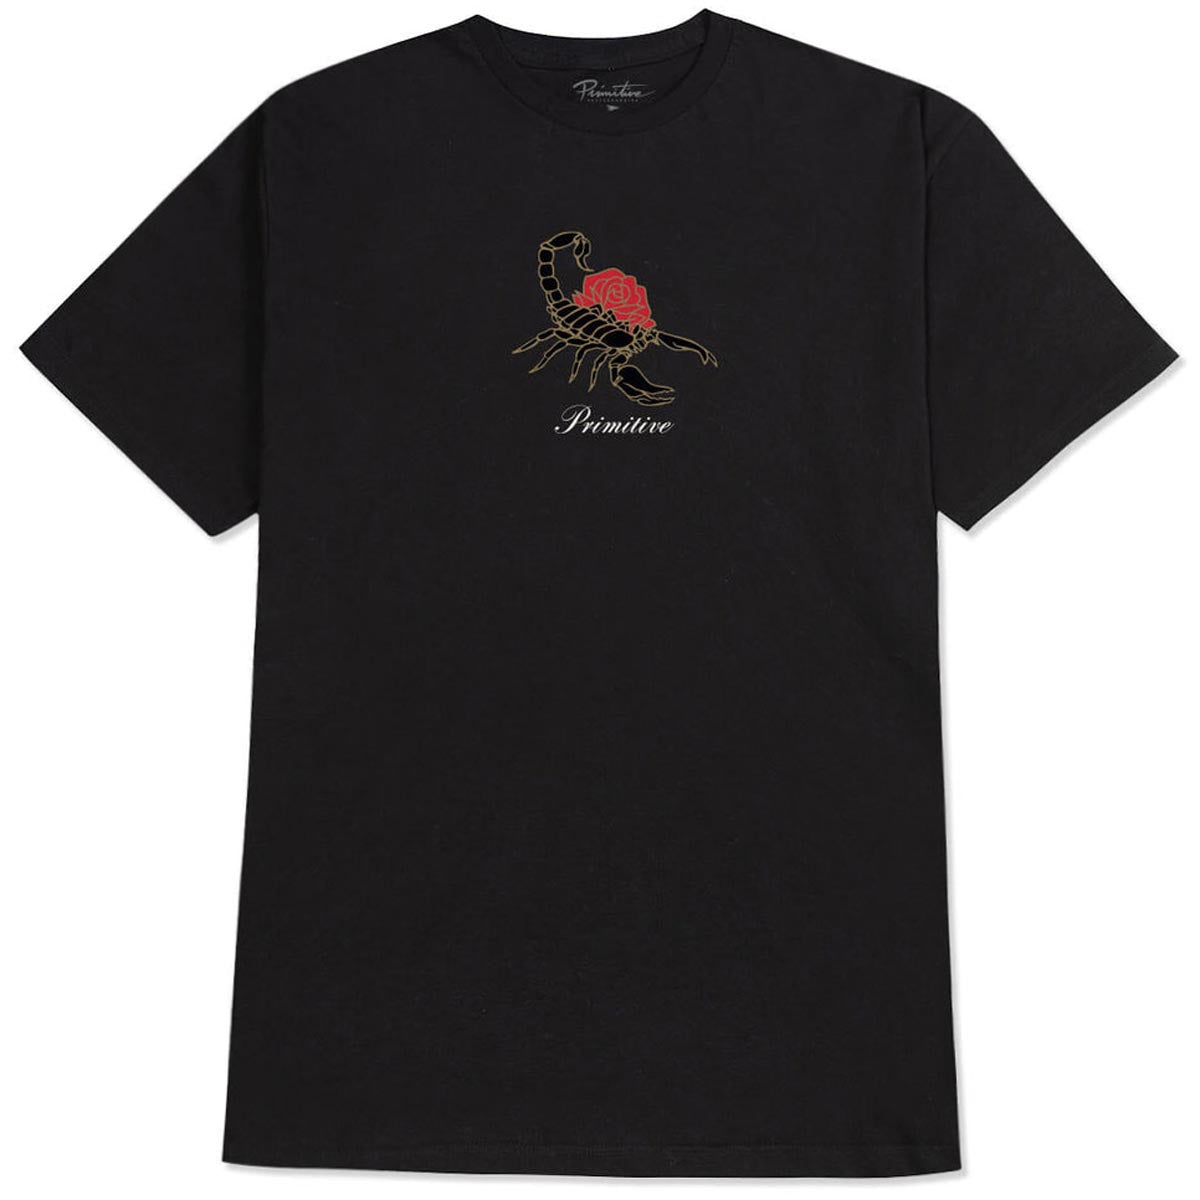 Primitive Scorpio Heavyweight T-Shirt - Black image 1